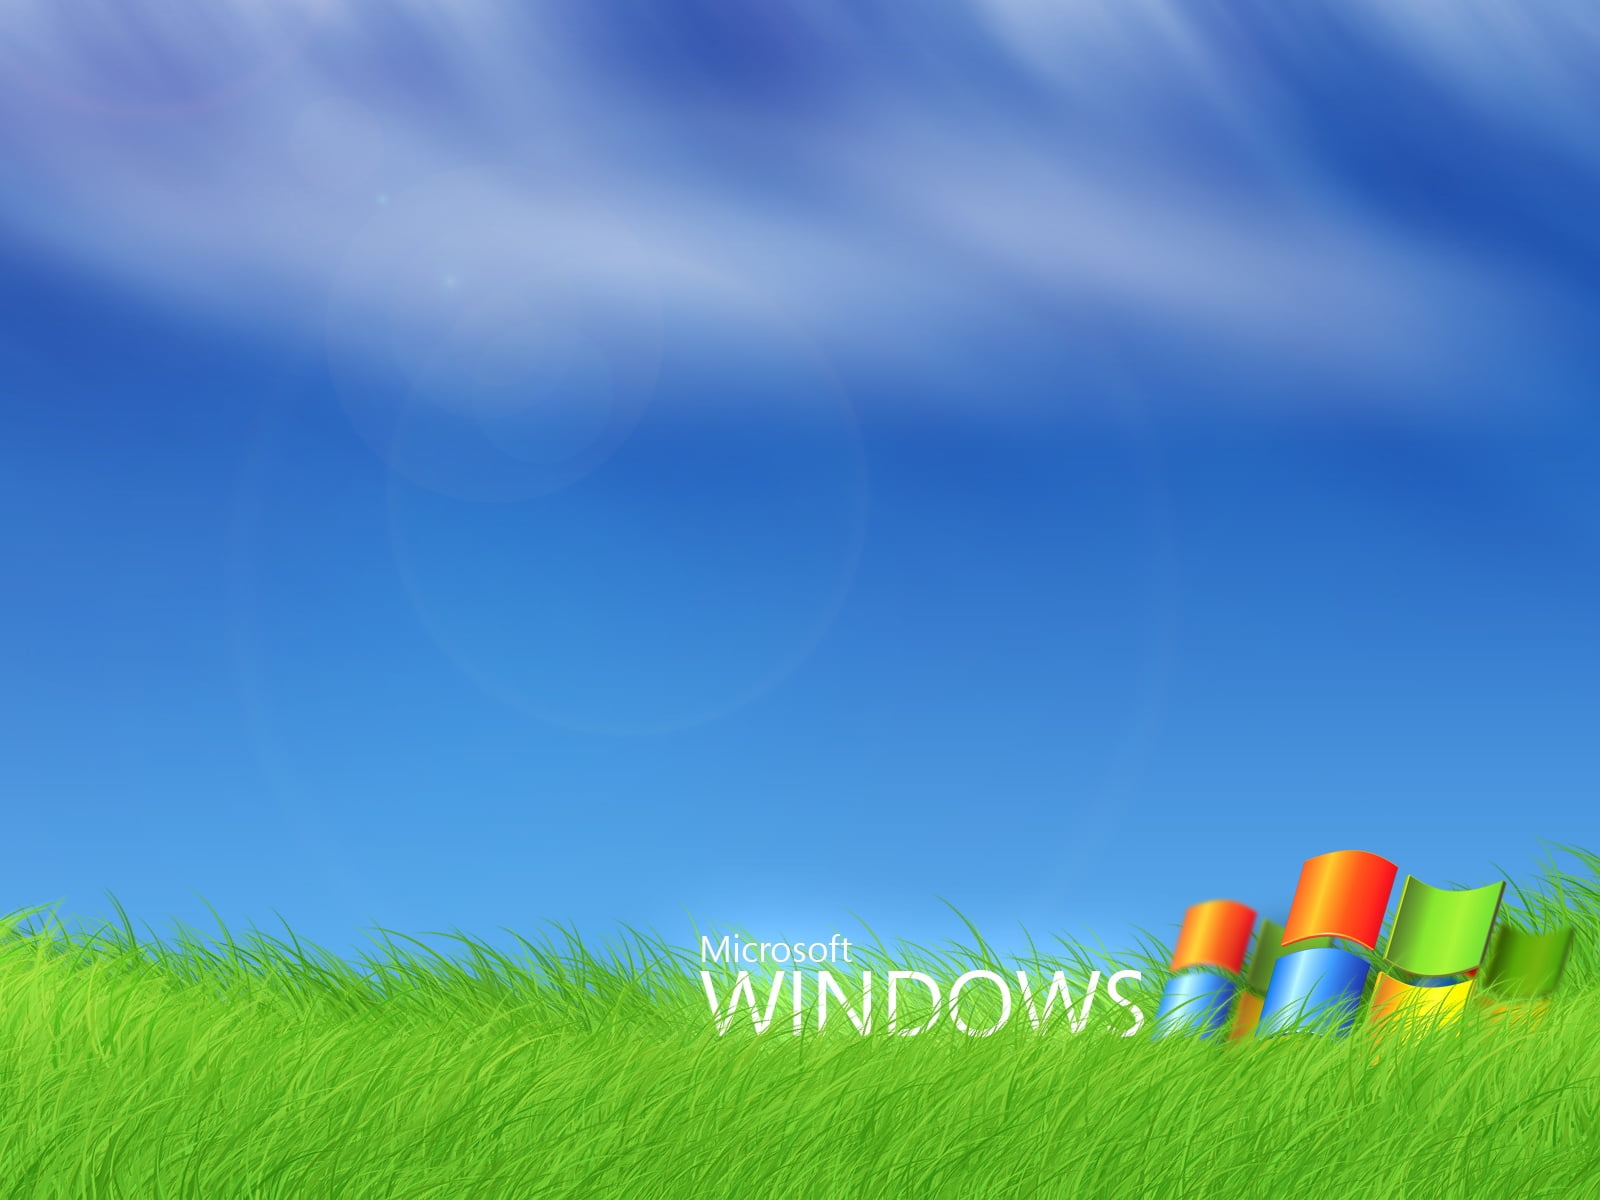 Microsoft Windows wallpaper, premium, grass, field, computer